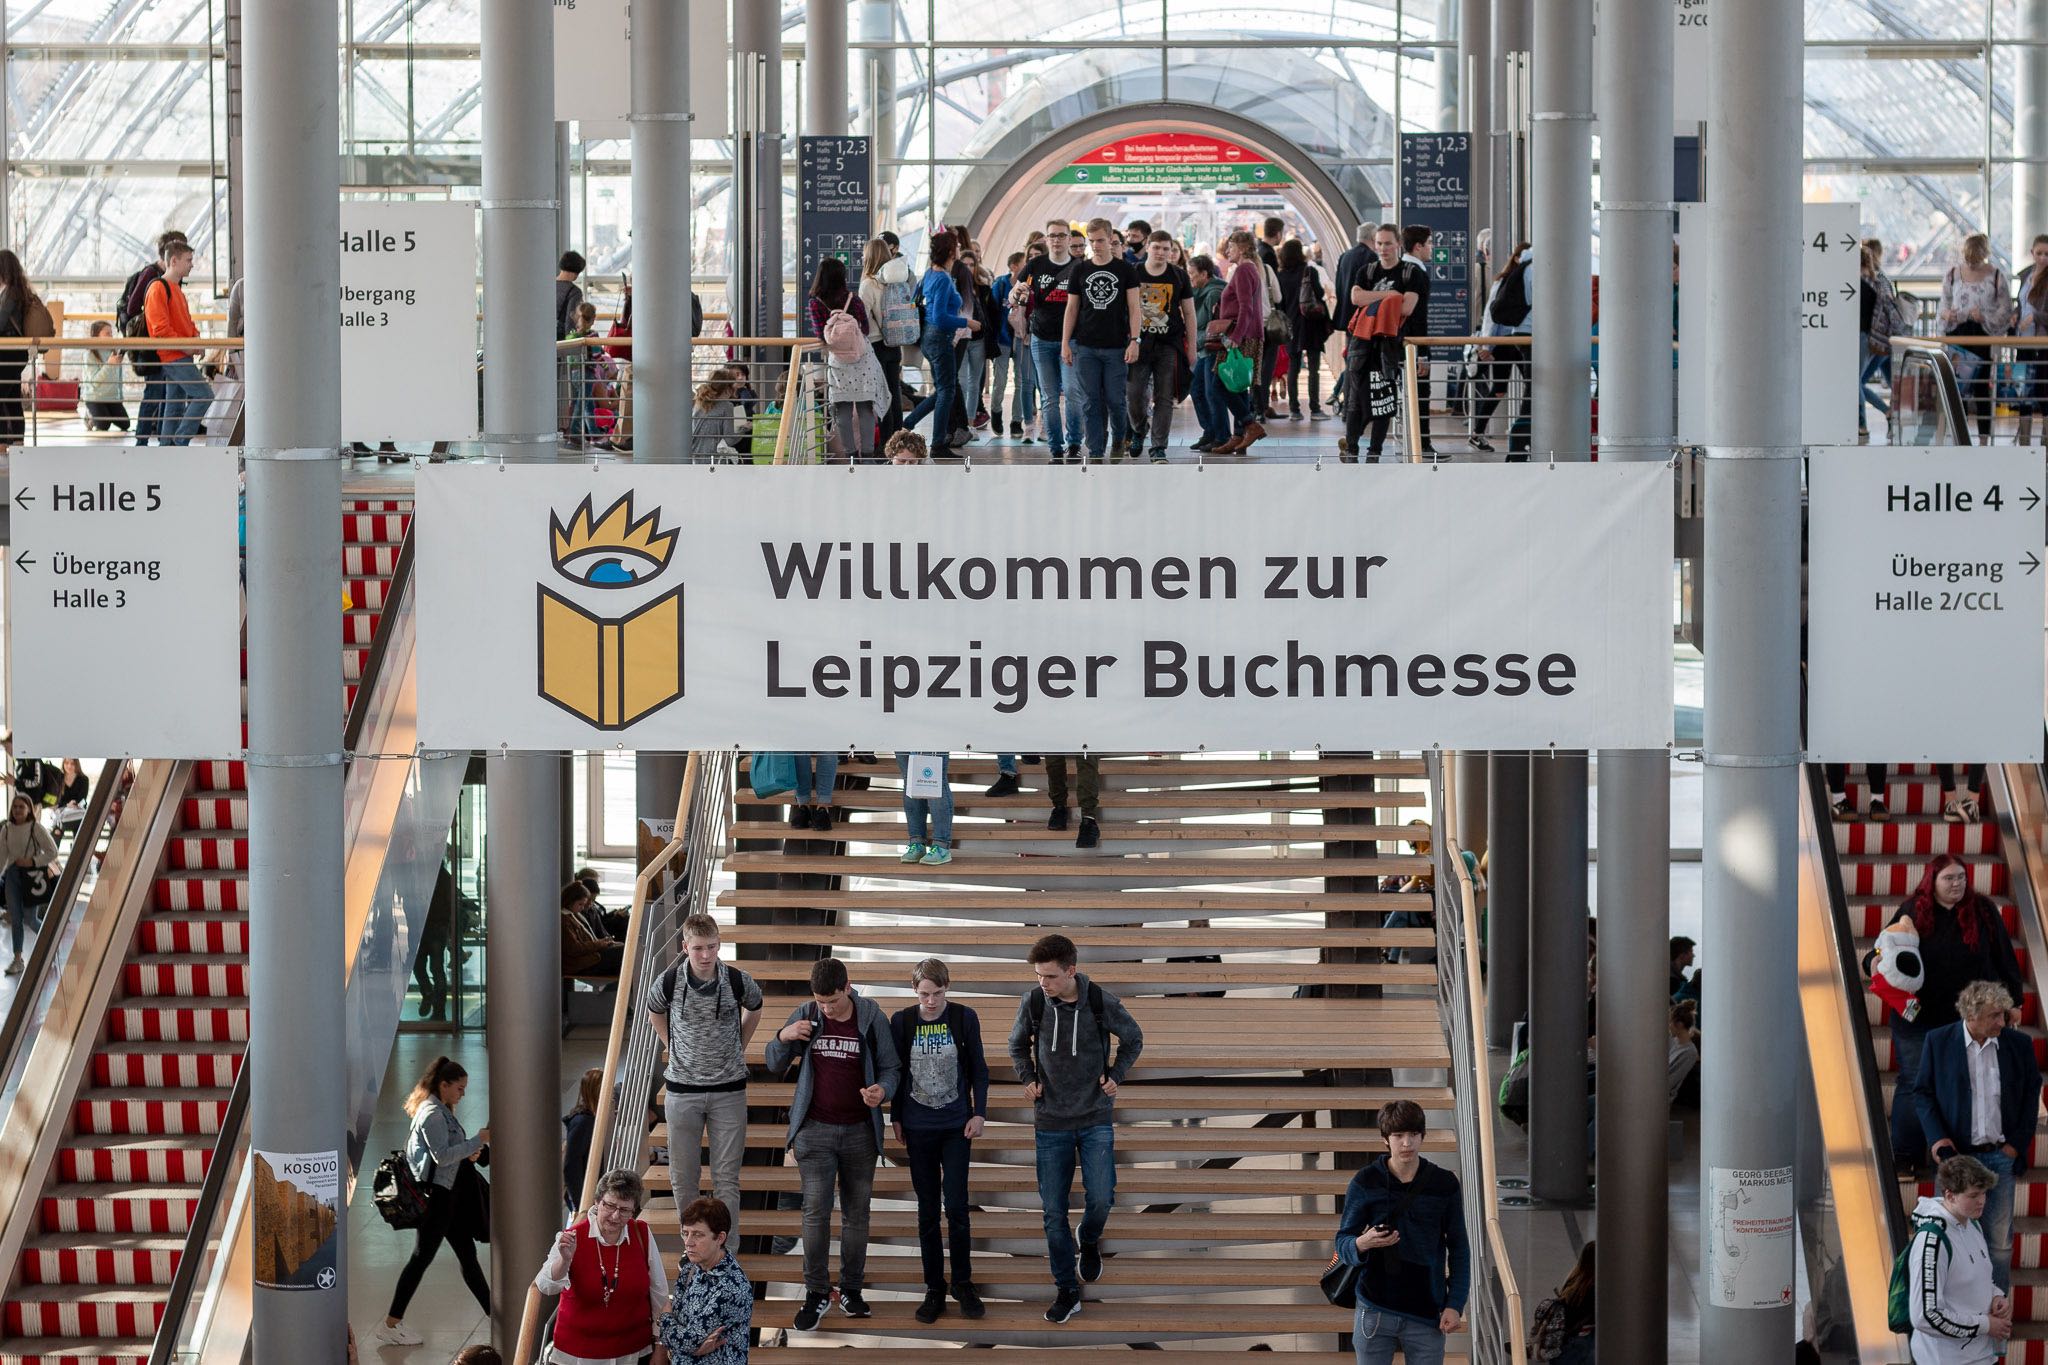 Leipziger Buchmesse lbm2019